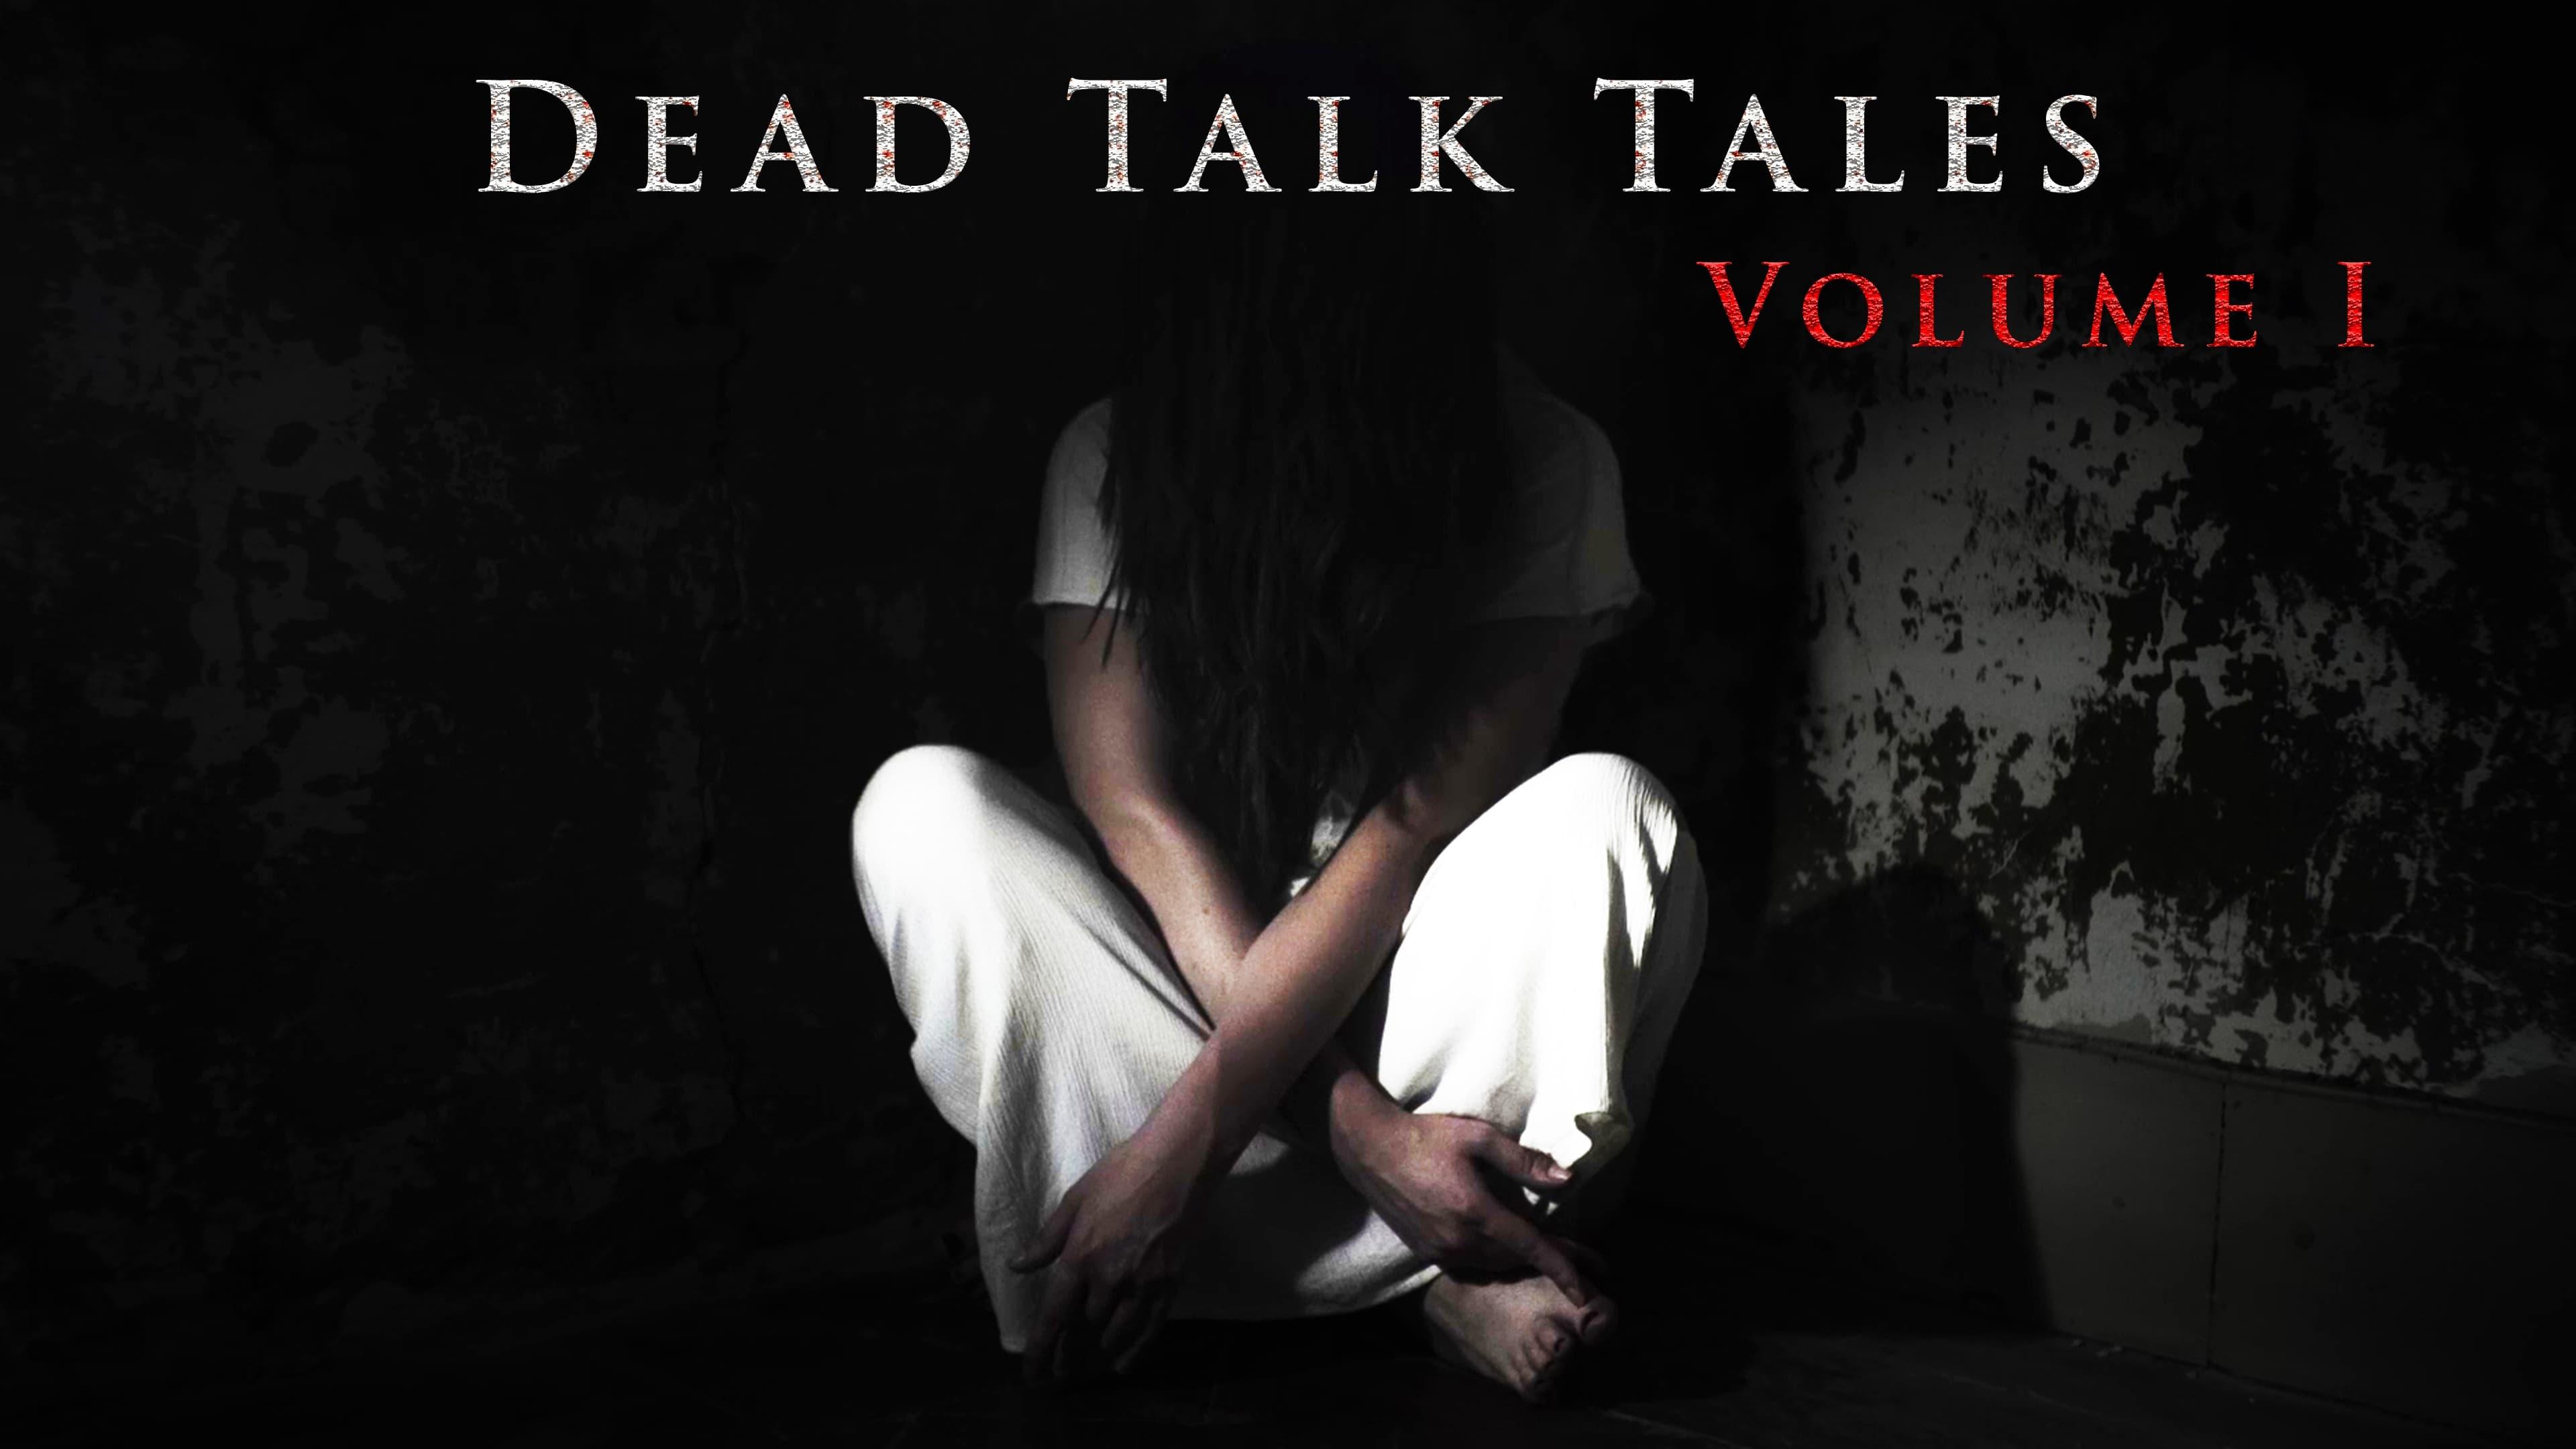 Dead Talk Tales: Volume I backdrop